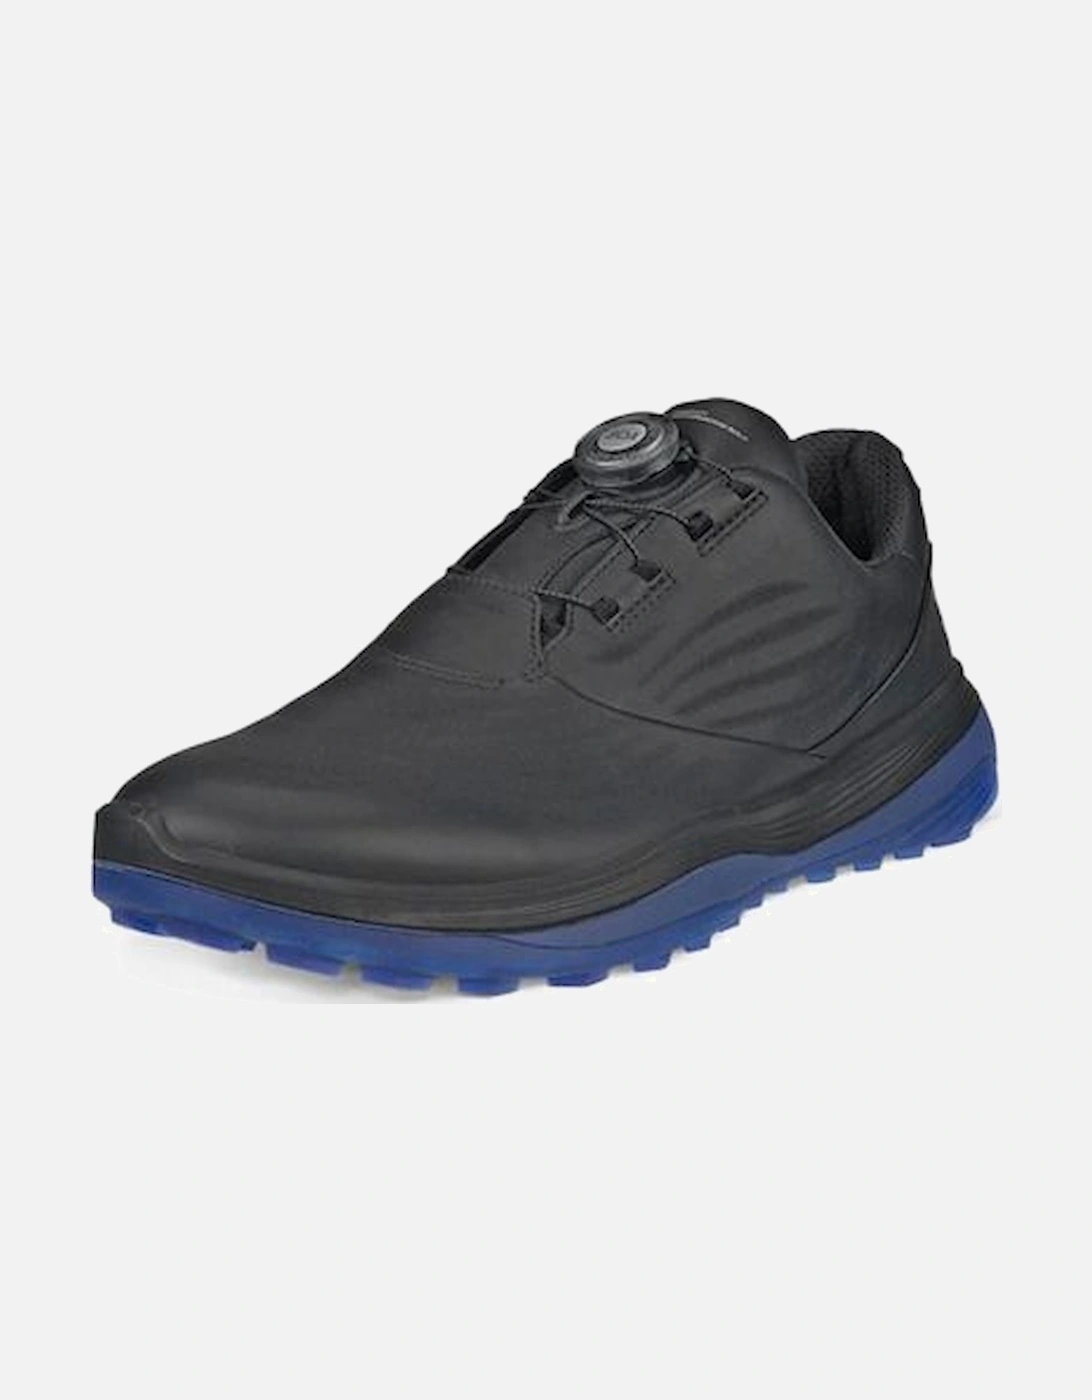 132274-01001 Mens Golf black leather shoe, 8 of 7